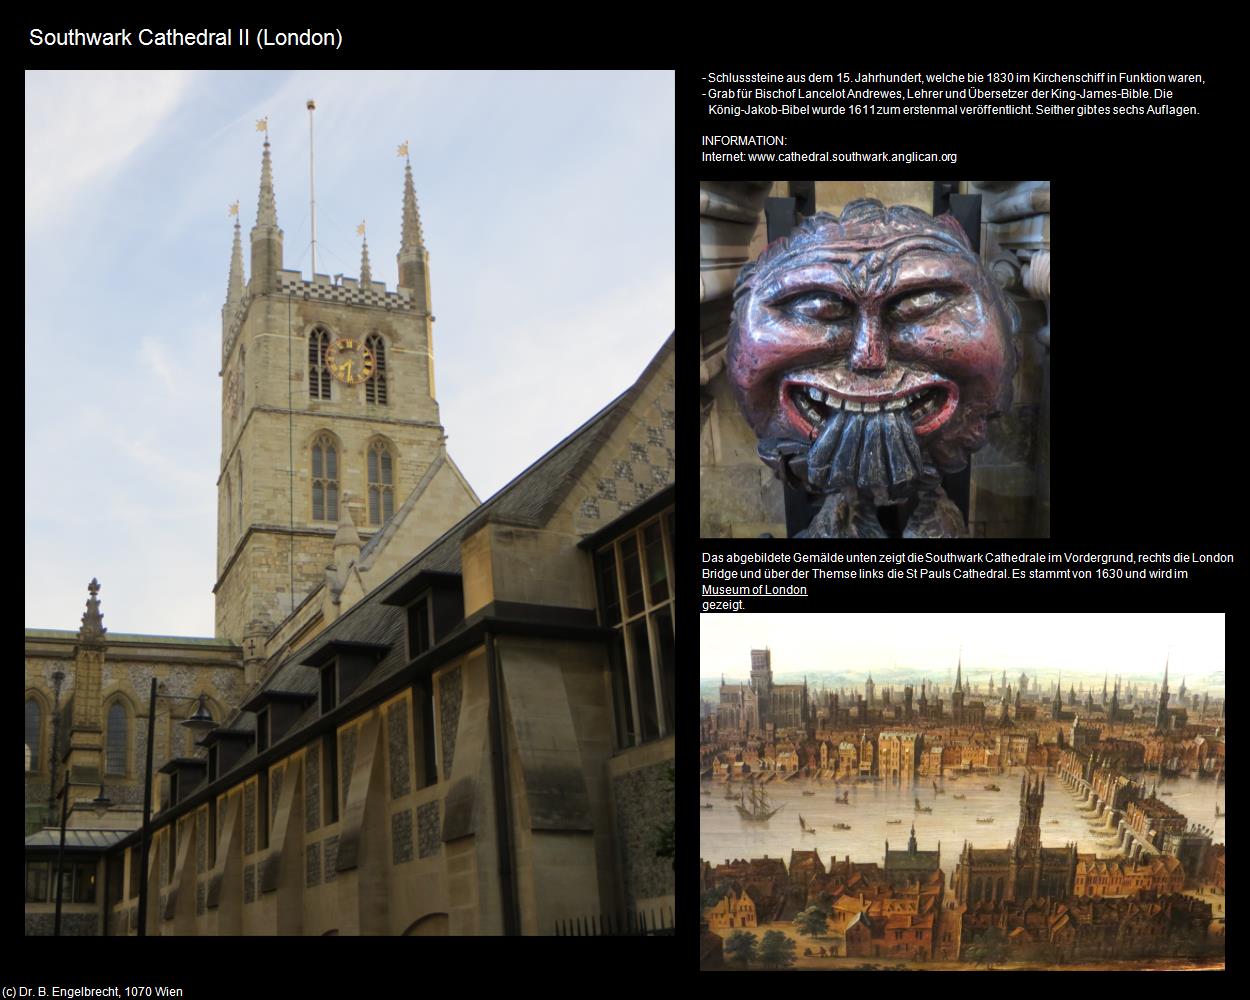 Southwark Cathedral II (London, England) in Kulturatlas-ENGLAND und WALES(c)B.Engelbrecht